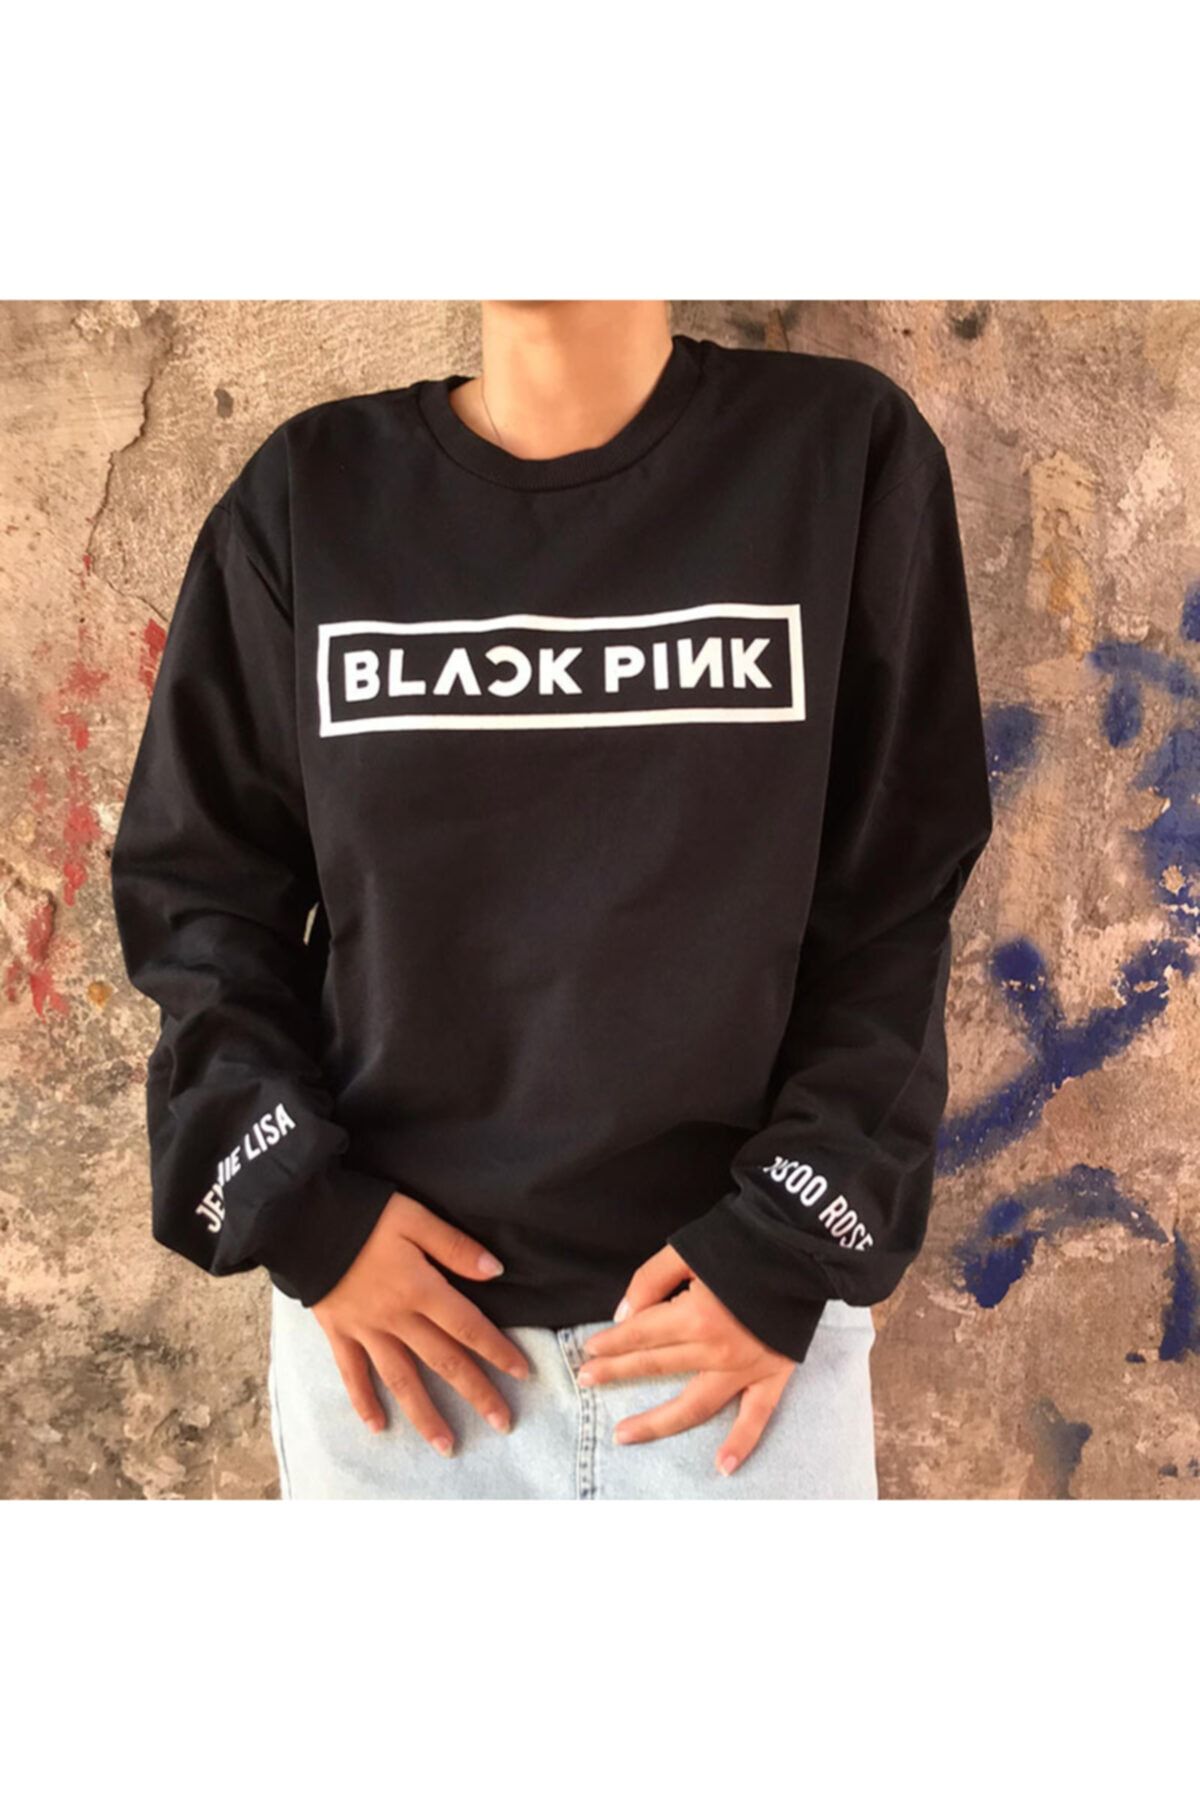 Köstebek K-pop Black Pink Grup Names (Unisex) Uzun Kollu